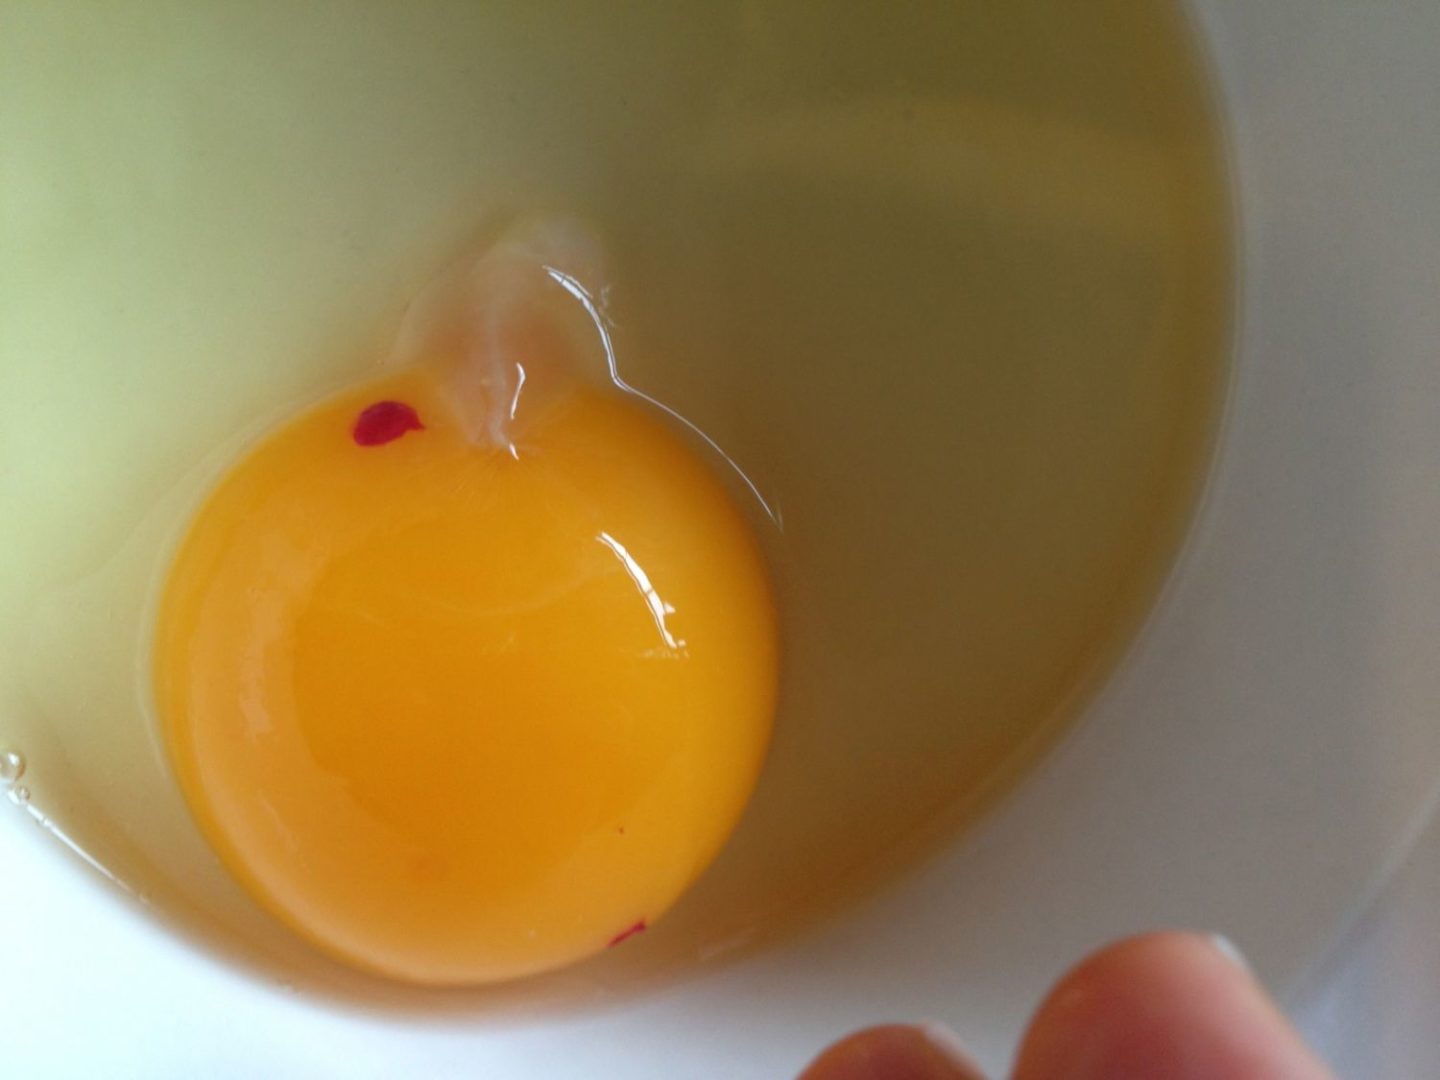 Egg_blood Spot